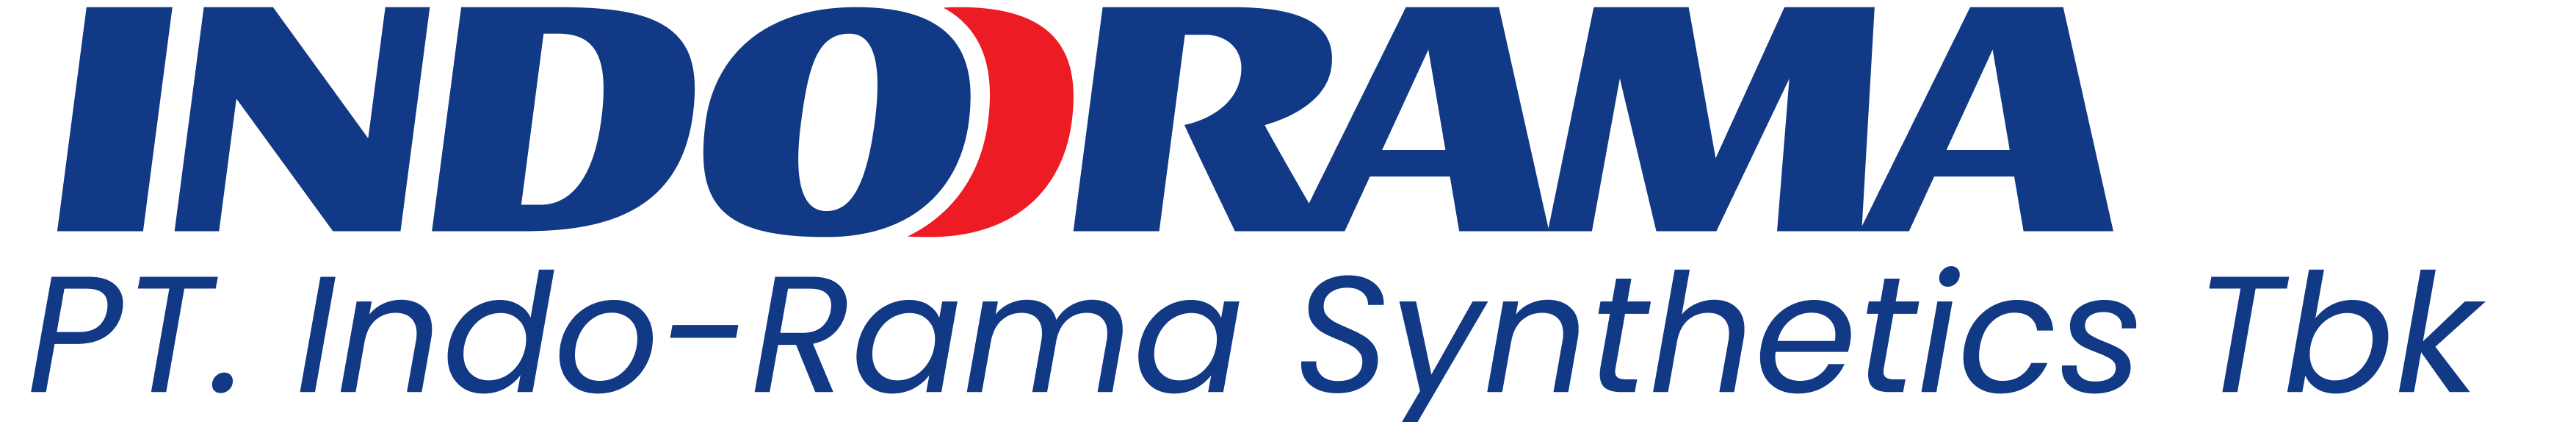 Indorama Logo